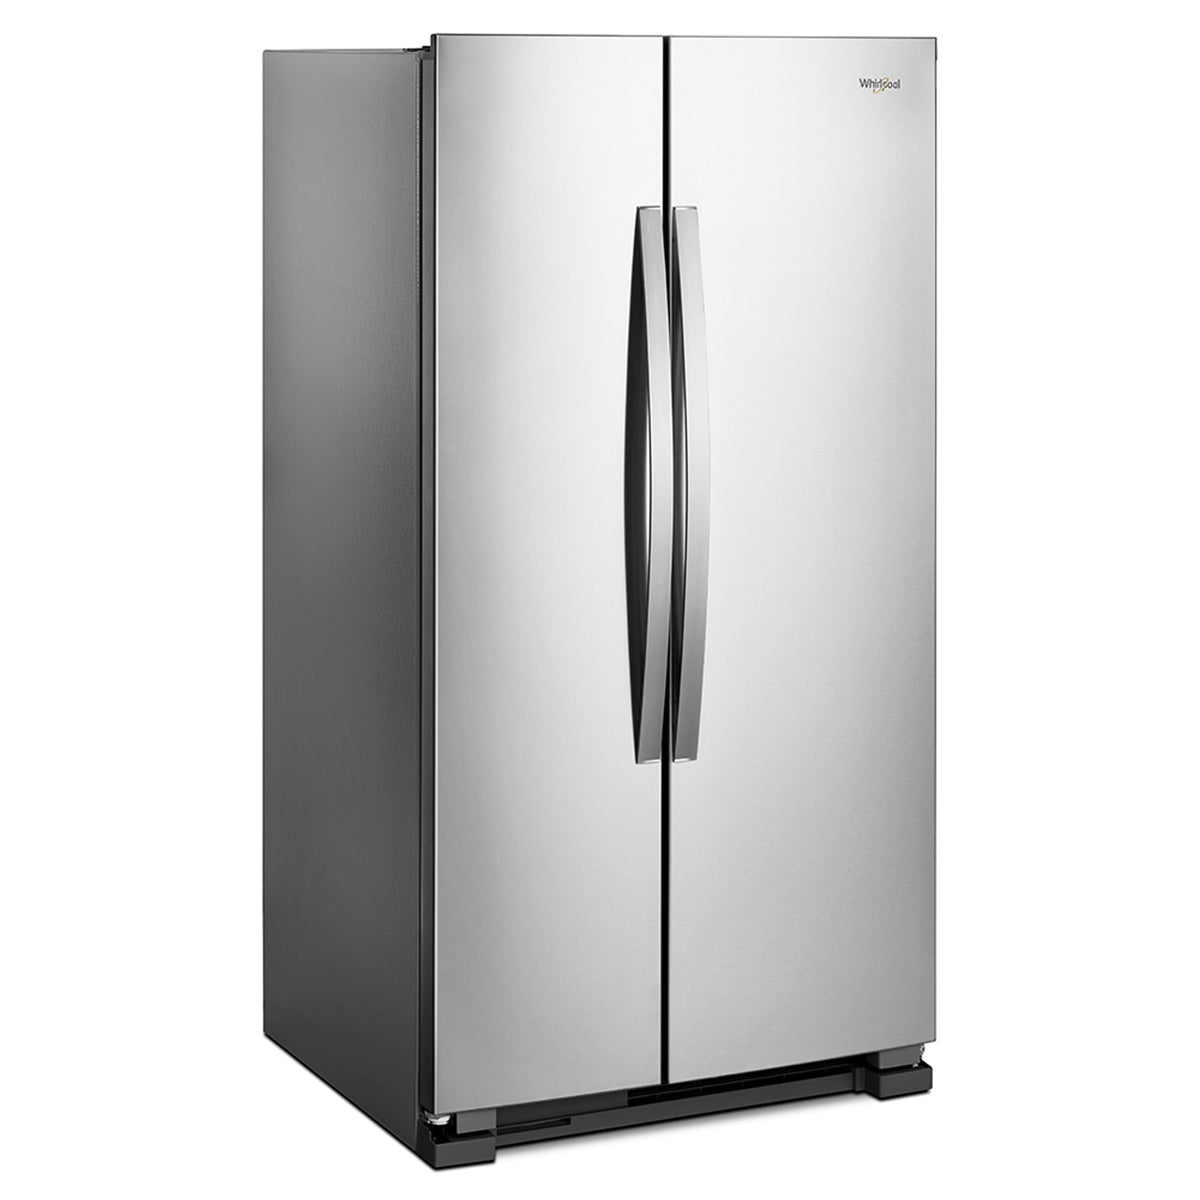 Refrigeradora Side by Side Whirlpool WD5600S | 25 pies cúbicos | Acero Inoxidable - Multimax